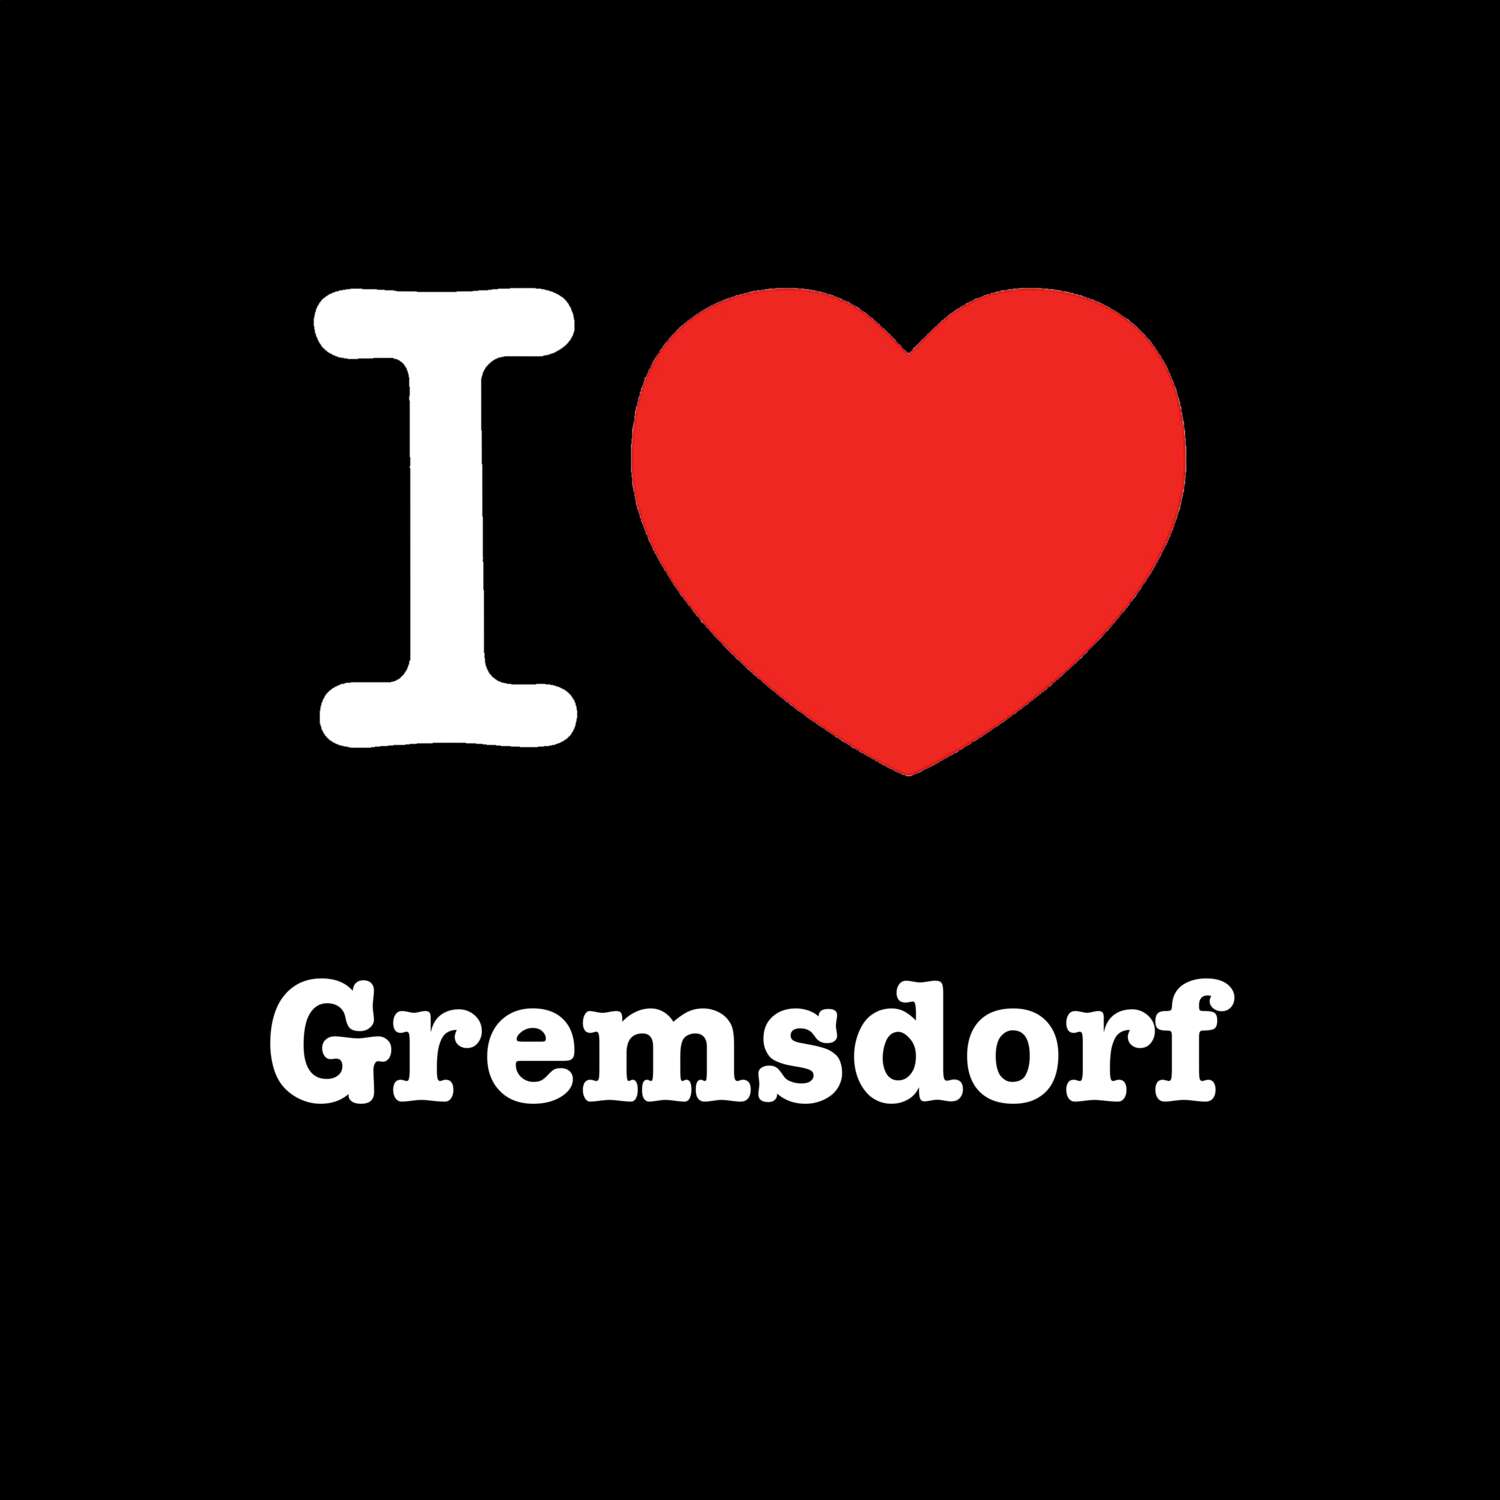 Gremsdorf T-Shirt »I love«